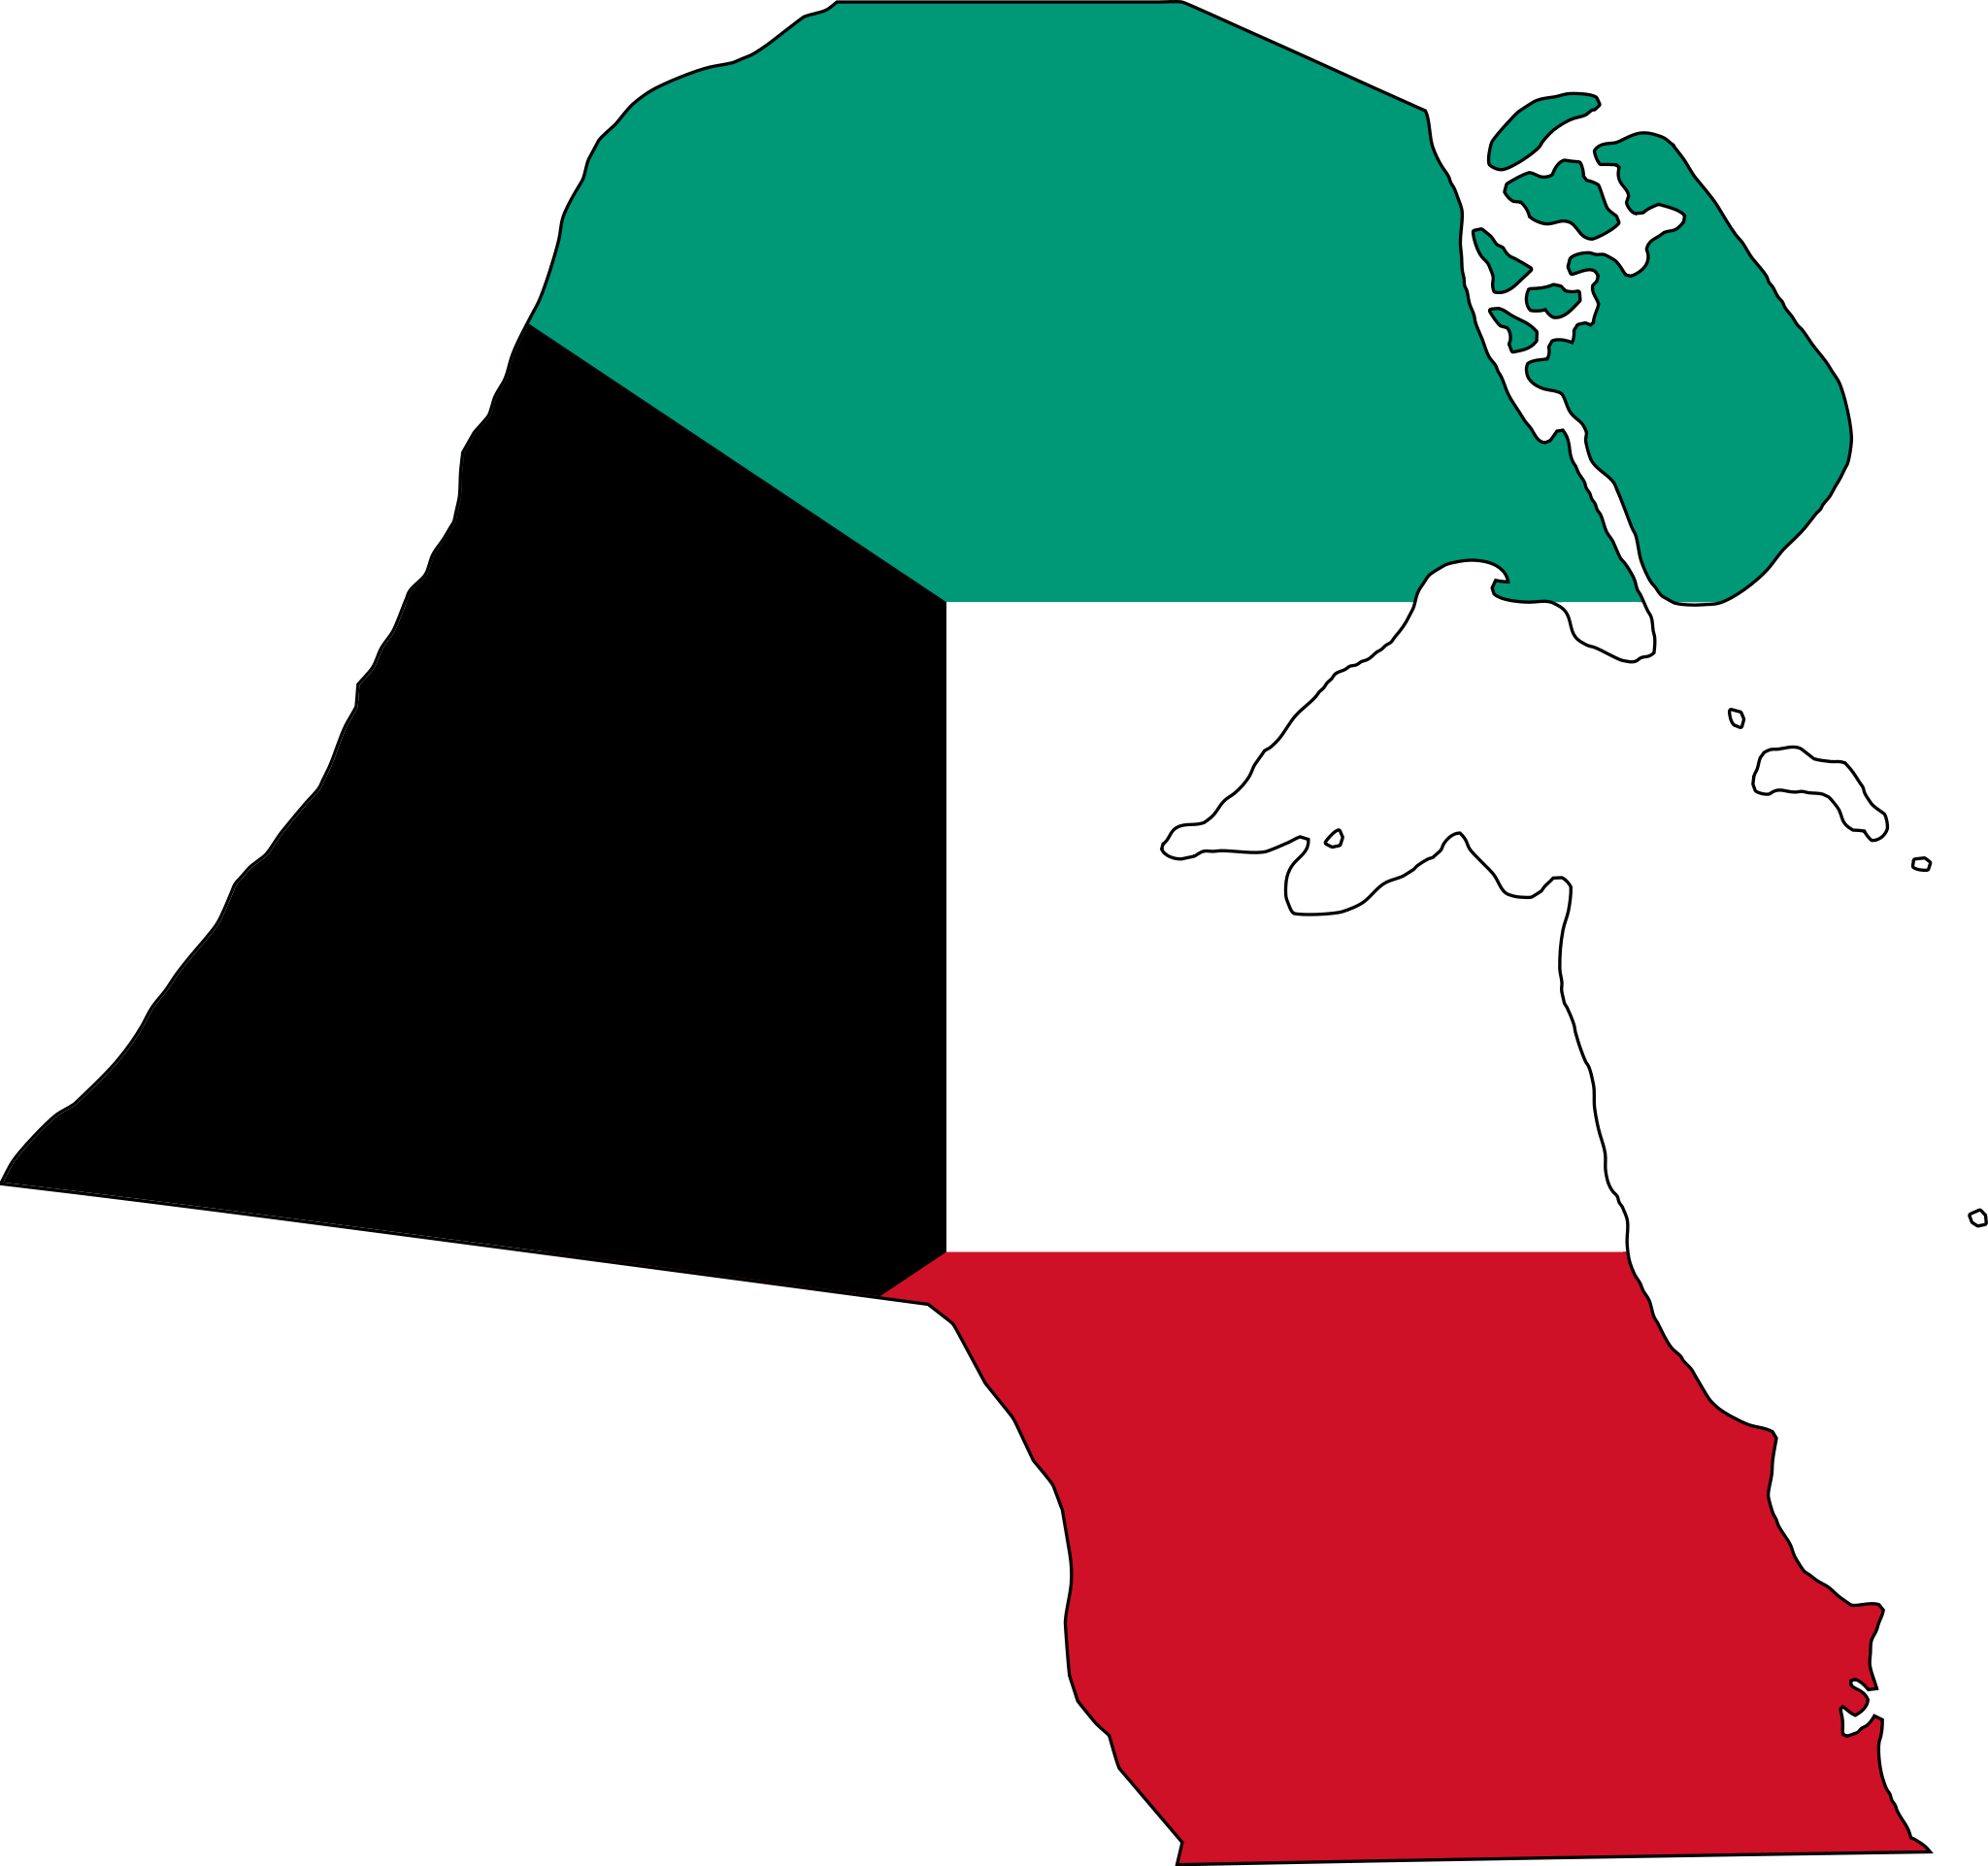 Kuwait_bayrak_harita.png